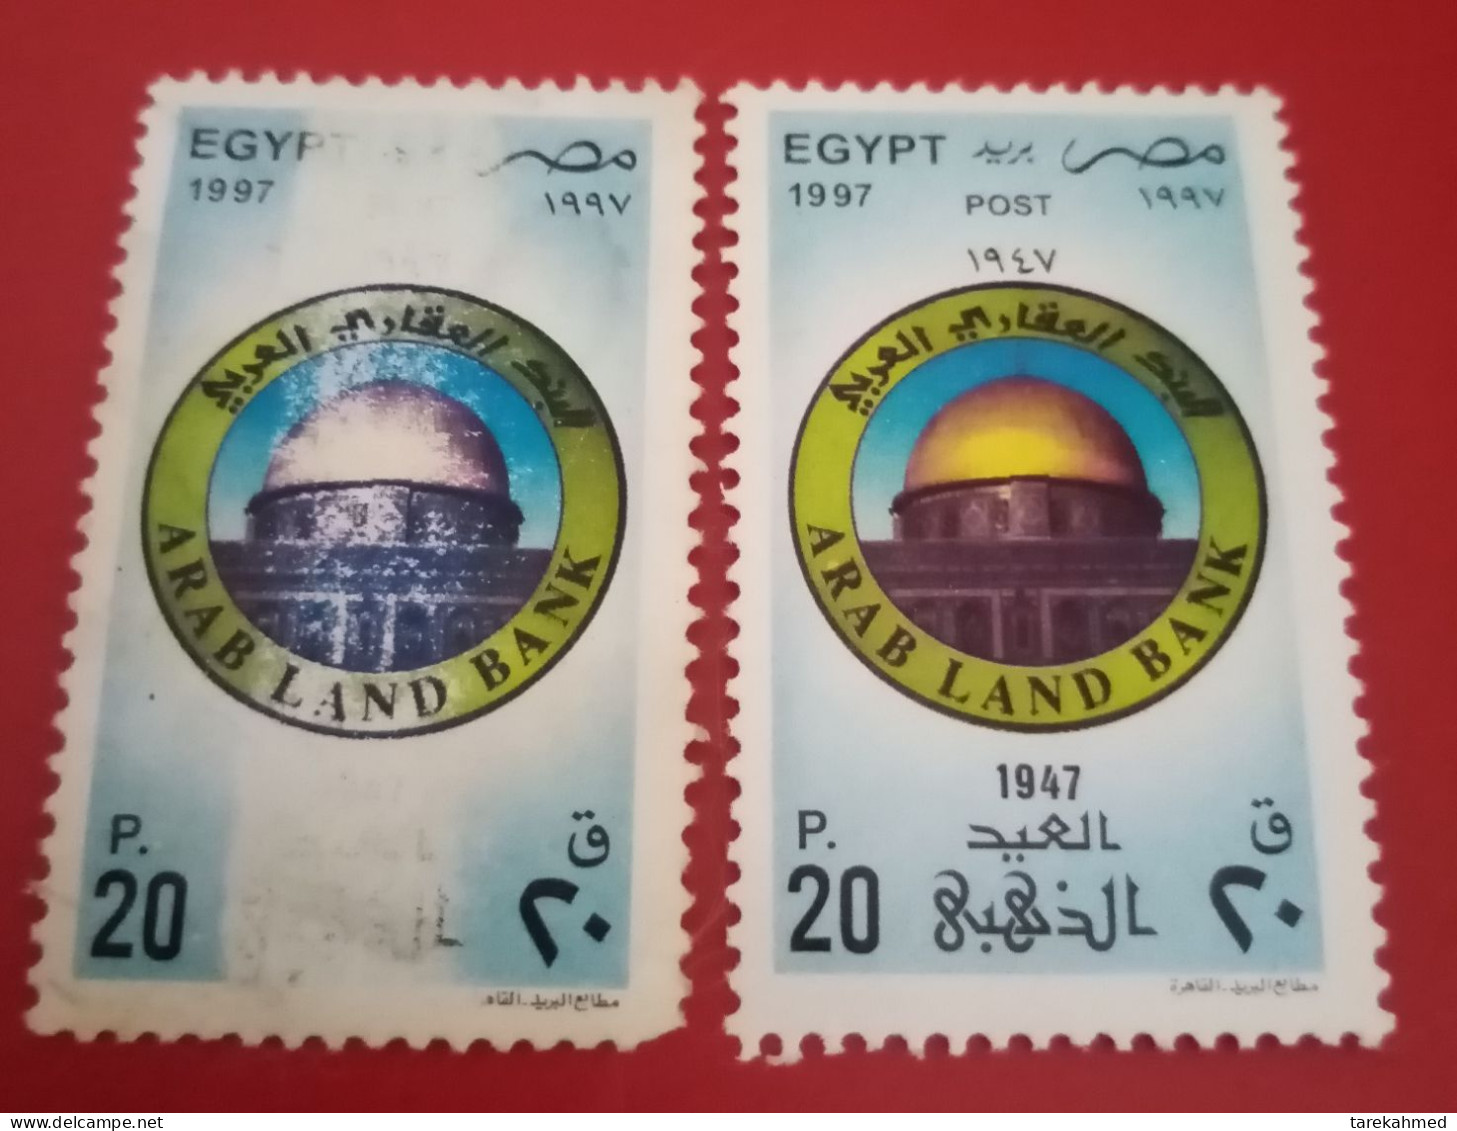 Egypt 1997, Print Error Of The SG 2062, 20p, Arab Land Bank, MNH - Unused Stamps